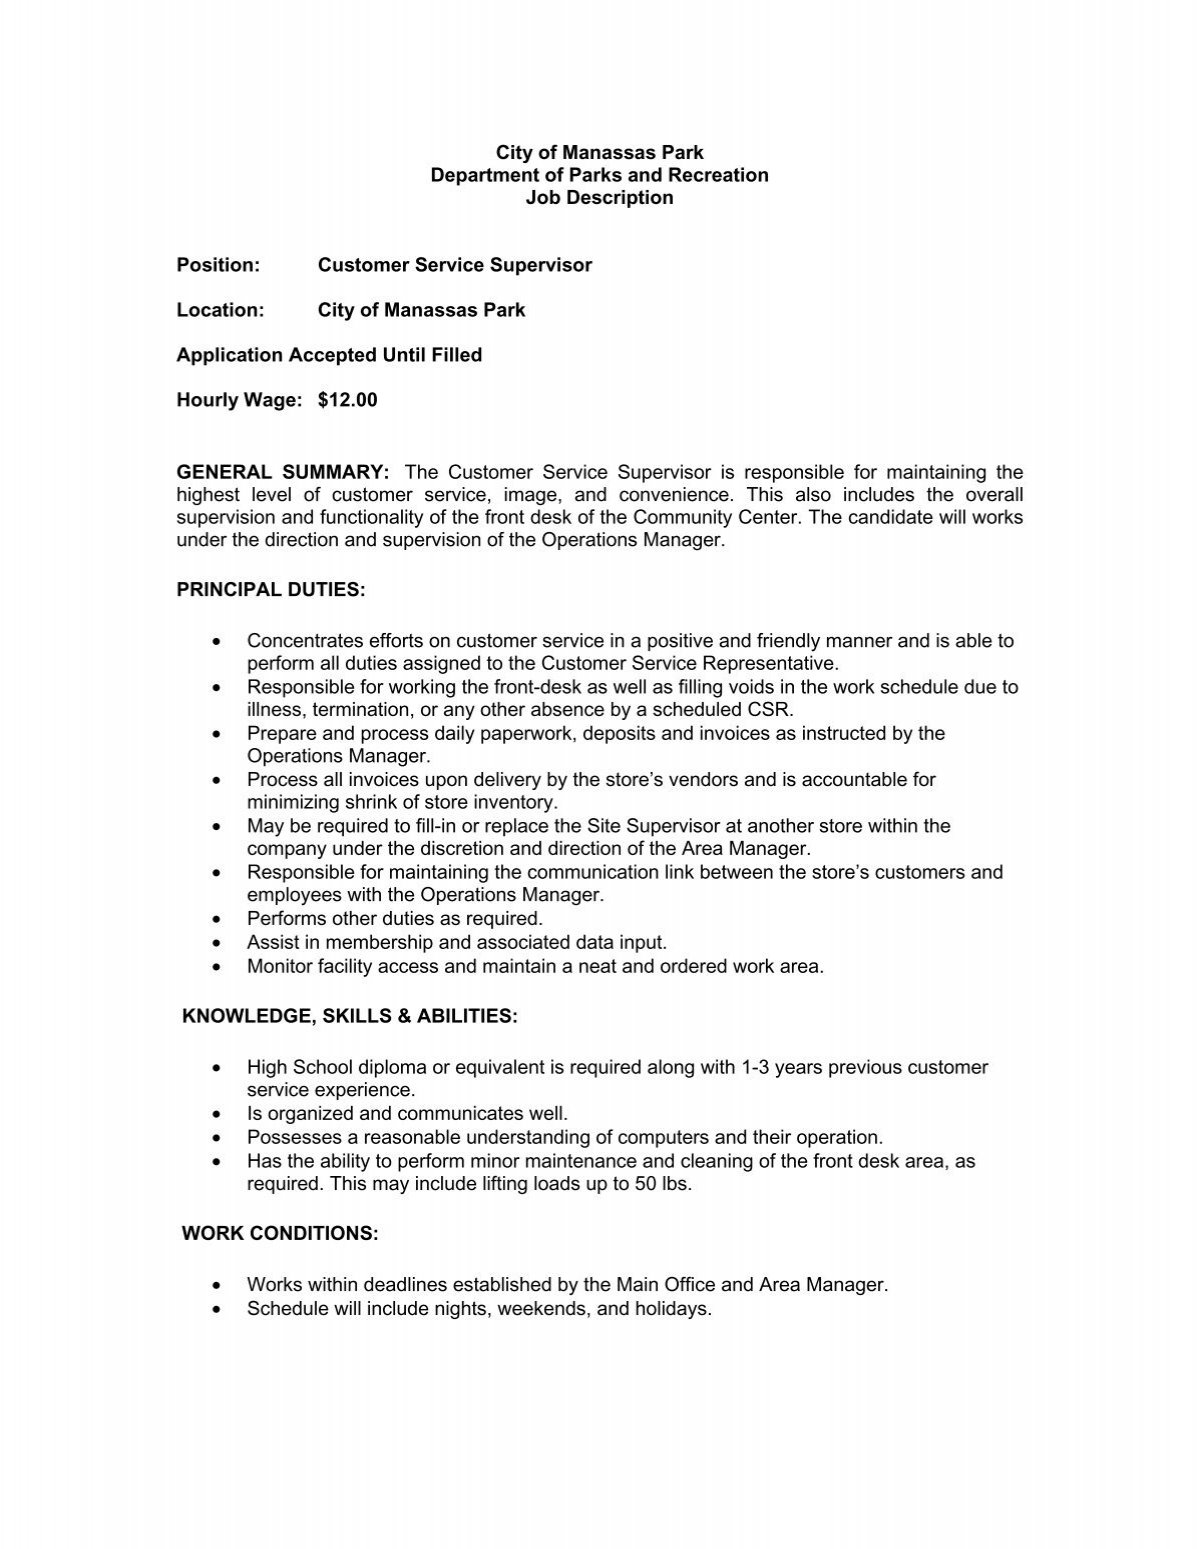 Customer Service Supervisor Job Description.pdf - City Of Manassas ...